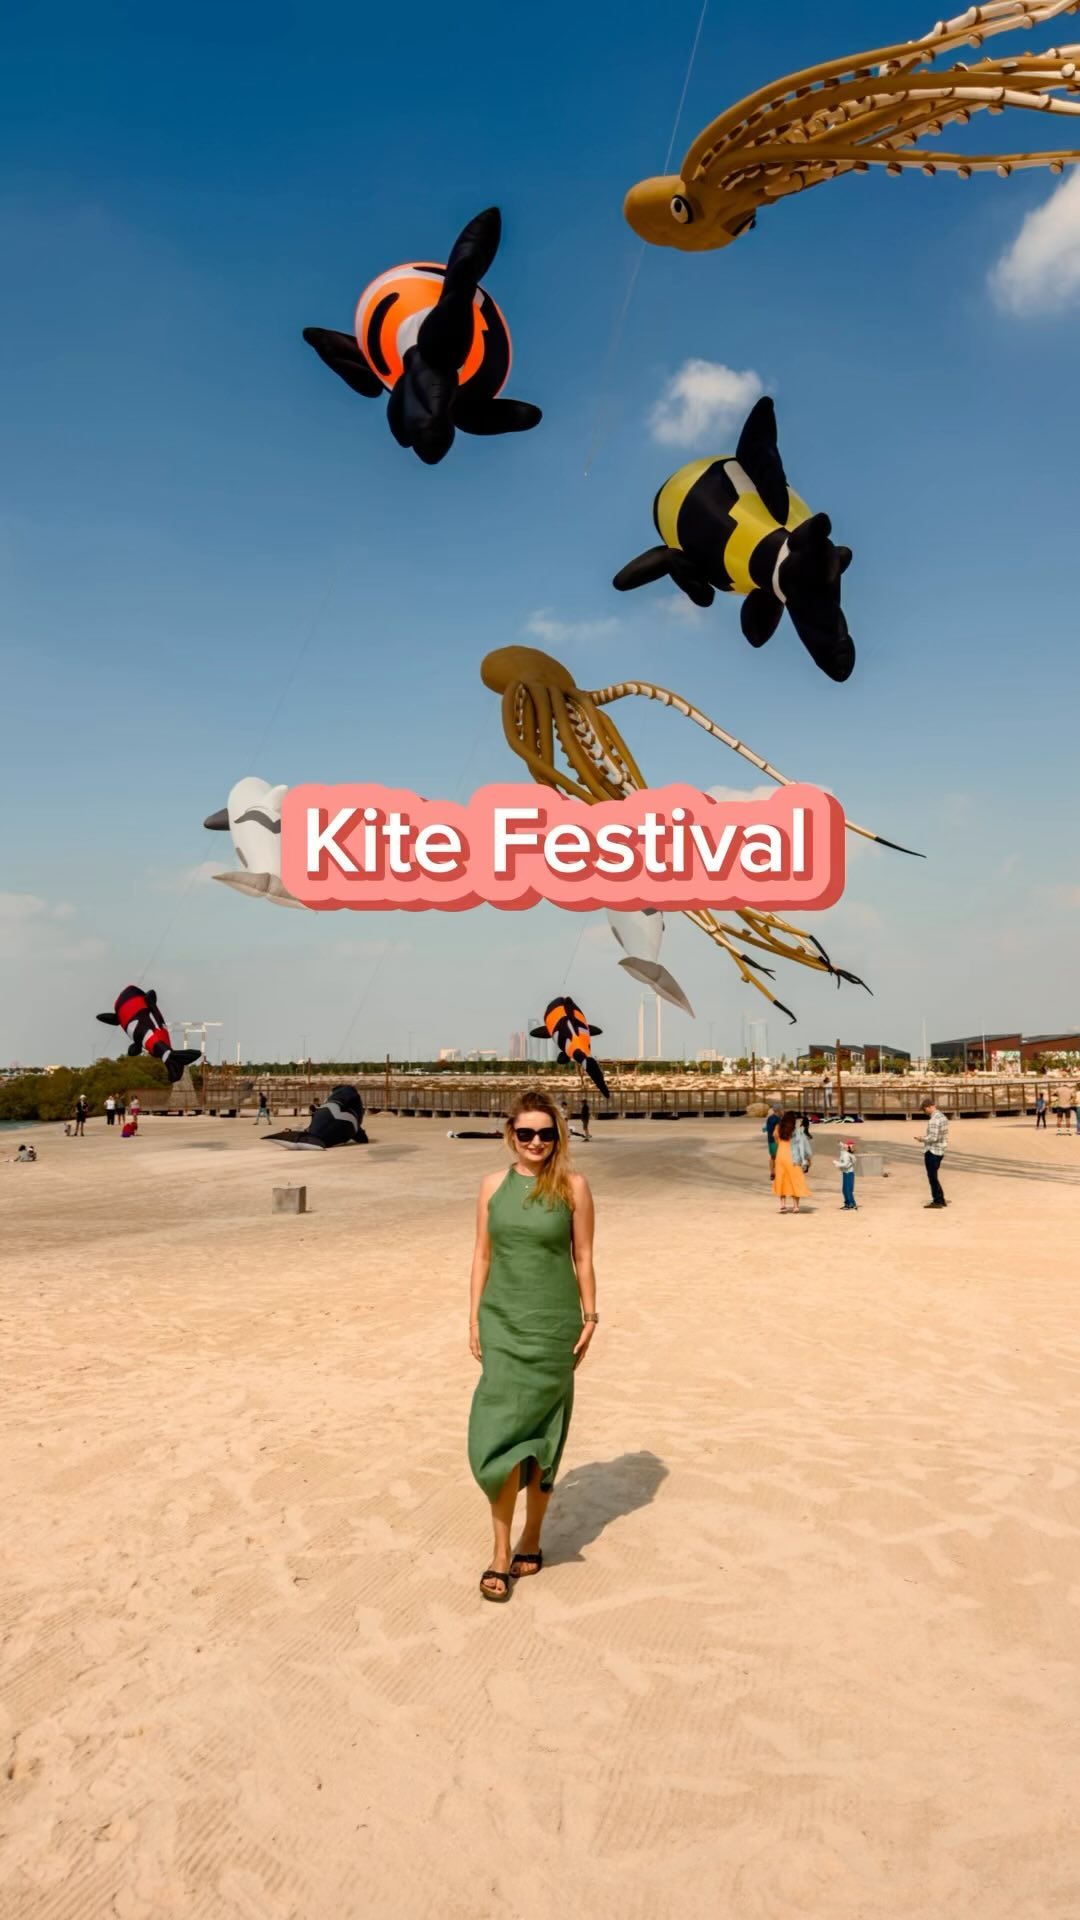 Kite Festival 🪁🥳✨
.
What an great event 🤩 Not only for kids 😬💖
.
.
Do you like kites? 🪁
.
.
📍 Hudayriat Island, Abu Dhabi
#mustvisitplace #hudayriatisland #sheisnotlost  #kitefestival #polkinaobczyznie #matkiexpatki #wearetravelgirls  #zjednoczoneemiratyarabskie #abudhabilife #abudhabicity🌴 #instaabudhabi  #amazingAbuDhabi  #IGersAbudhabi #greatabudhabi #visitabudhabi  #polkawabudhabi #forabudhabi #iloveabudhabi  #travellikeagirl #whataview #amazingplace #travelphotography  #polkawemiratach  #gogogirl #inabudhabi🇦🇪 #matkafotografka ❤️ #whatsonabudhabi #abudhabilifestyle #girllikeme #inabudhabi